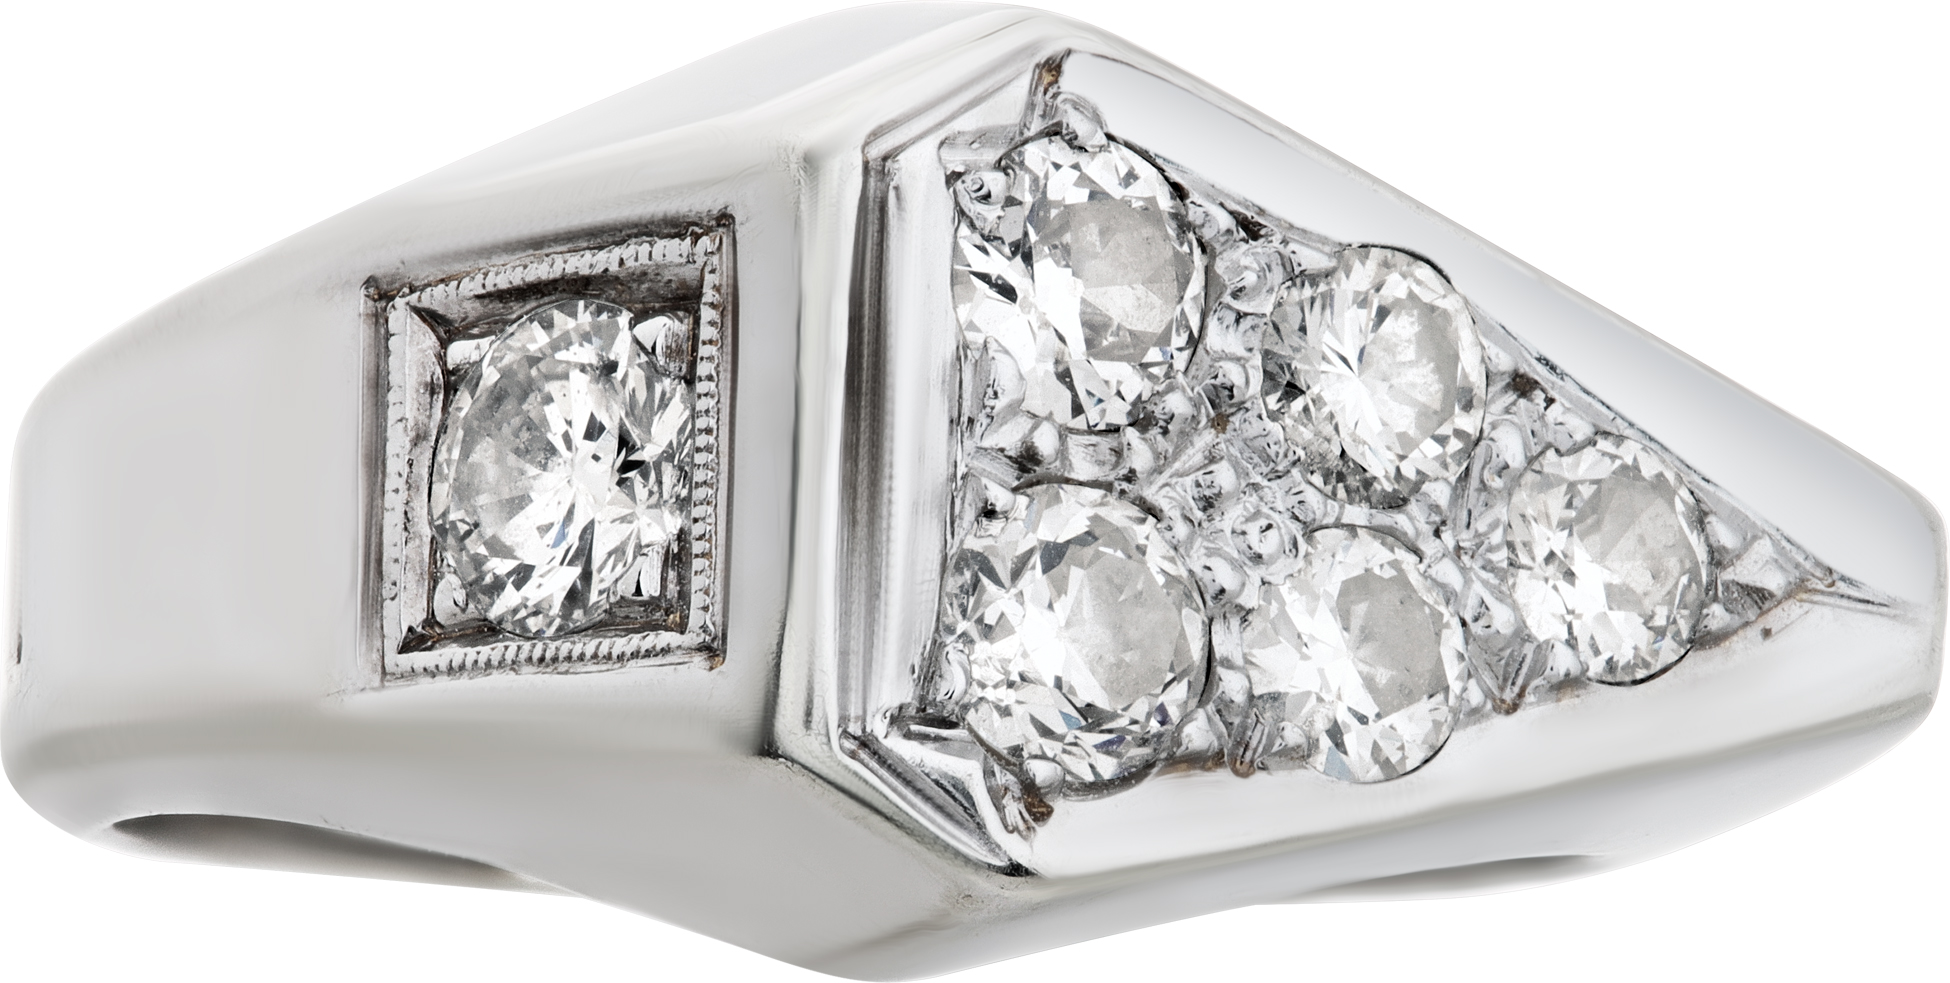 Unisex 14k white gold ring with diamonds